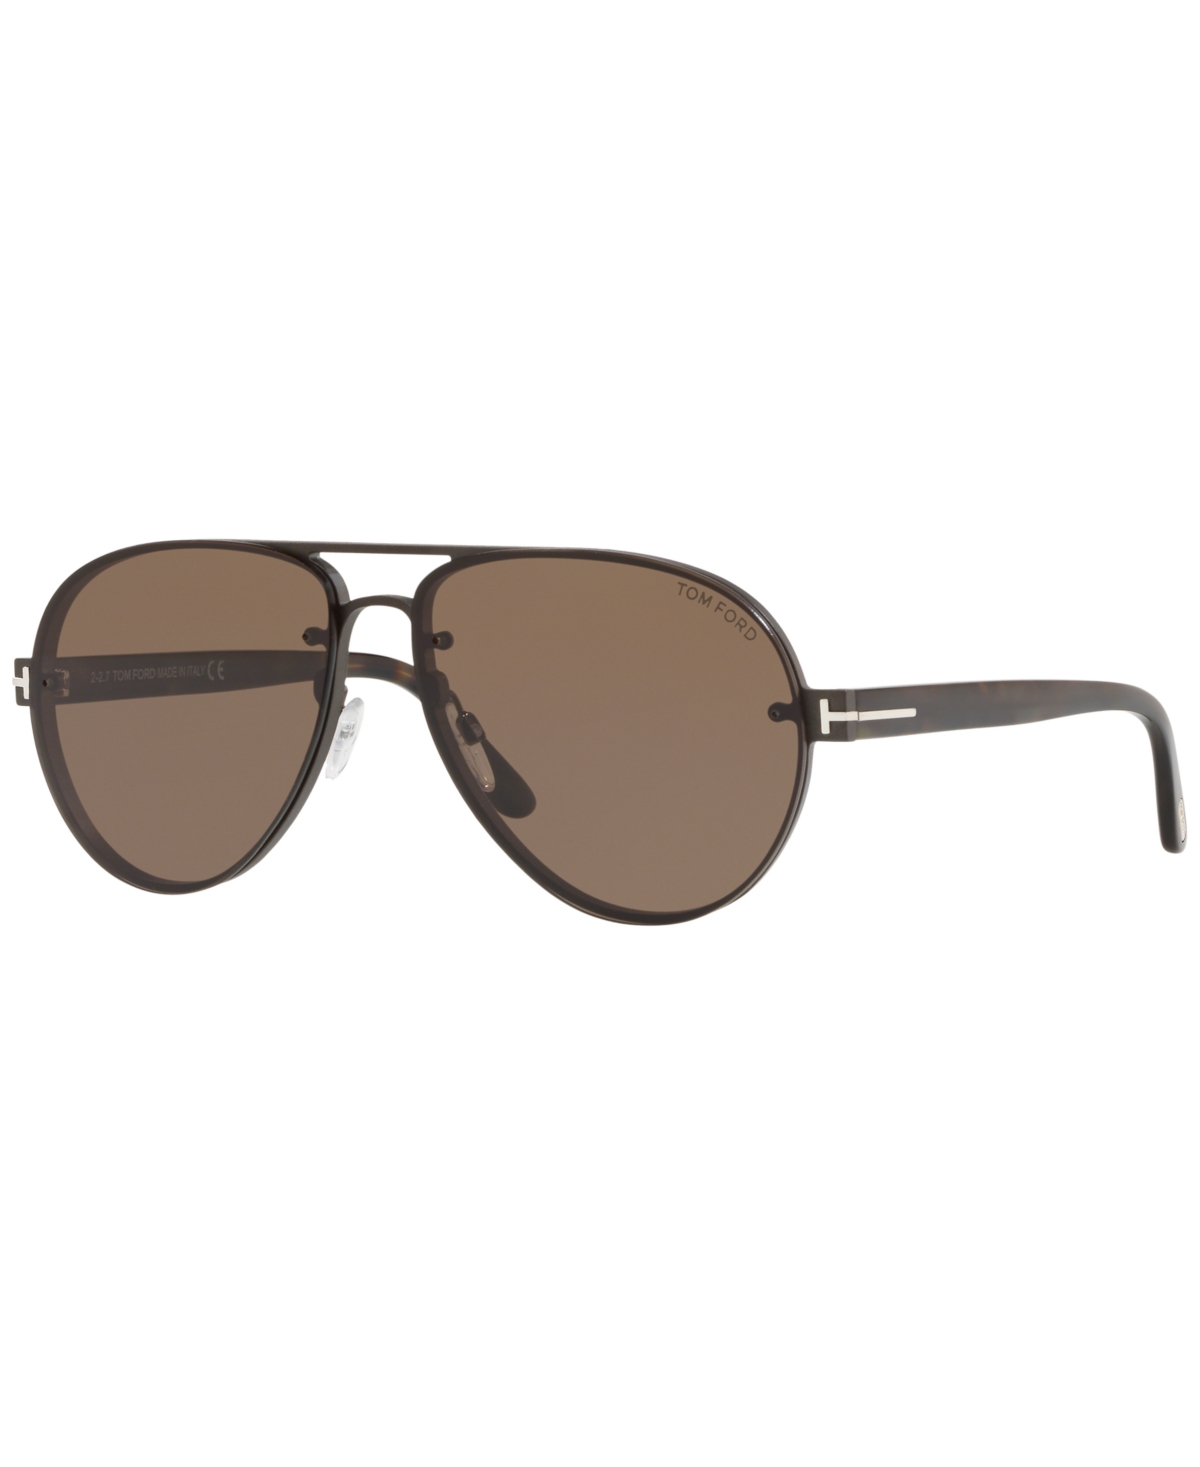 Sunglasses, FT0622 62 - Matte Black